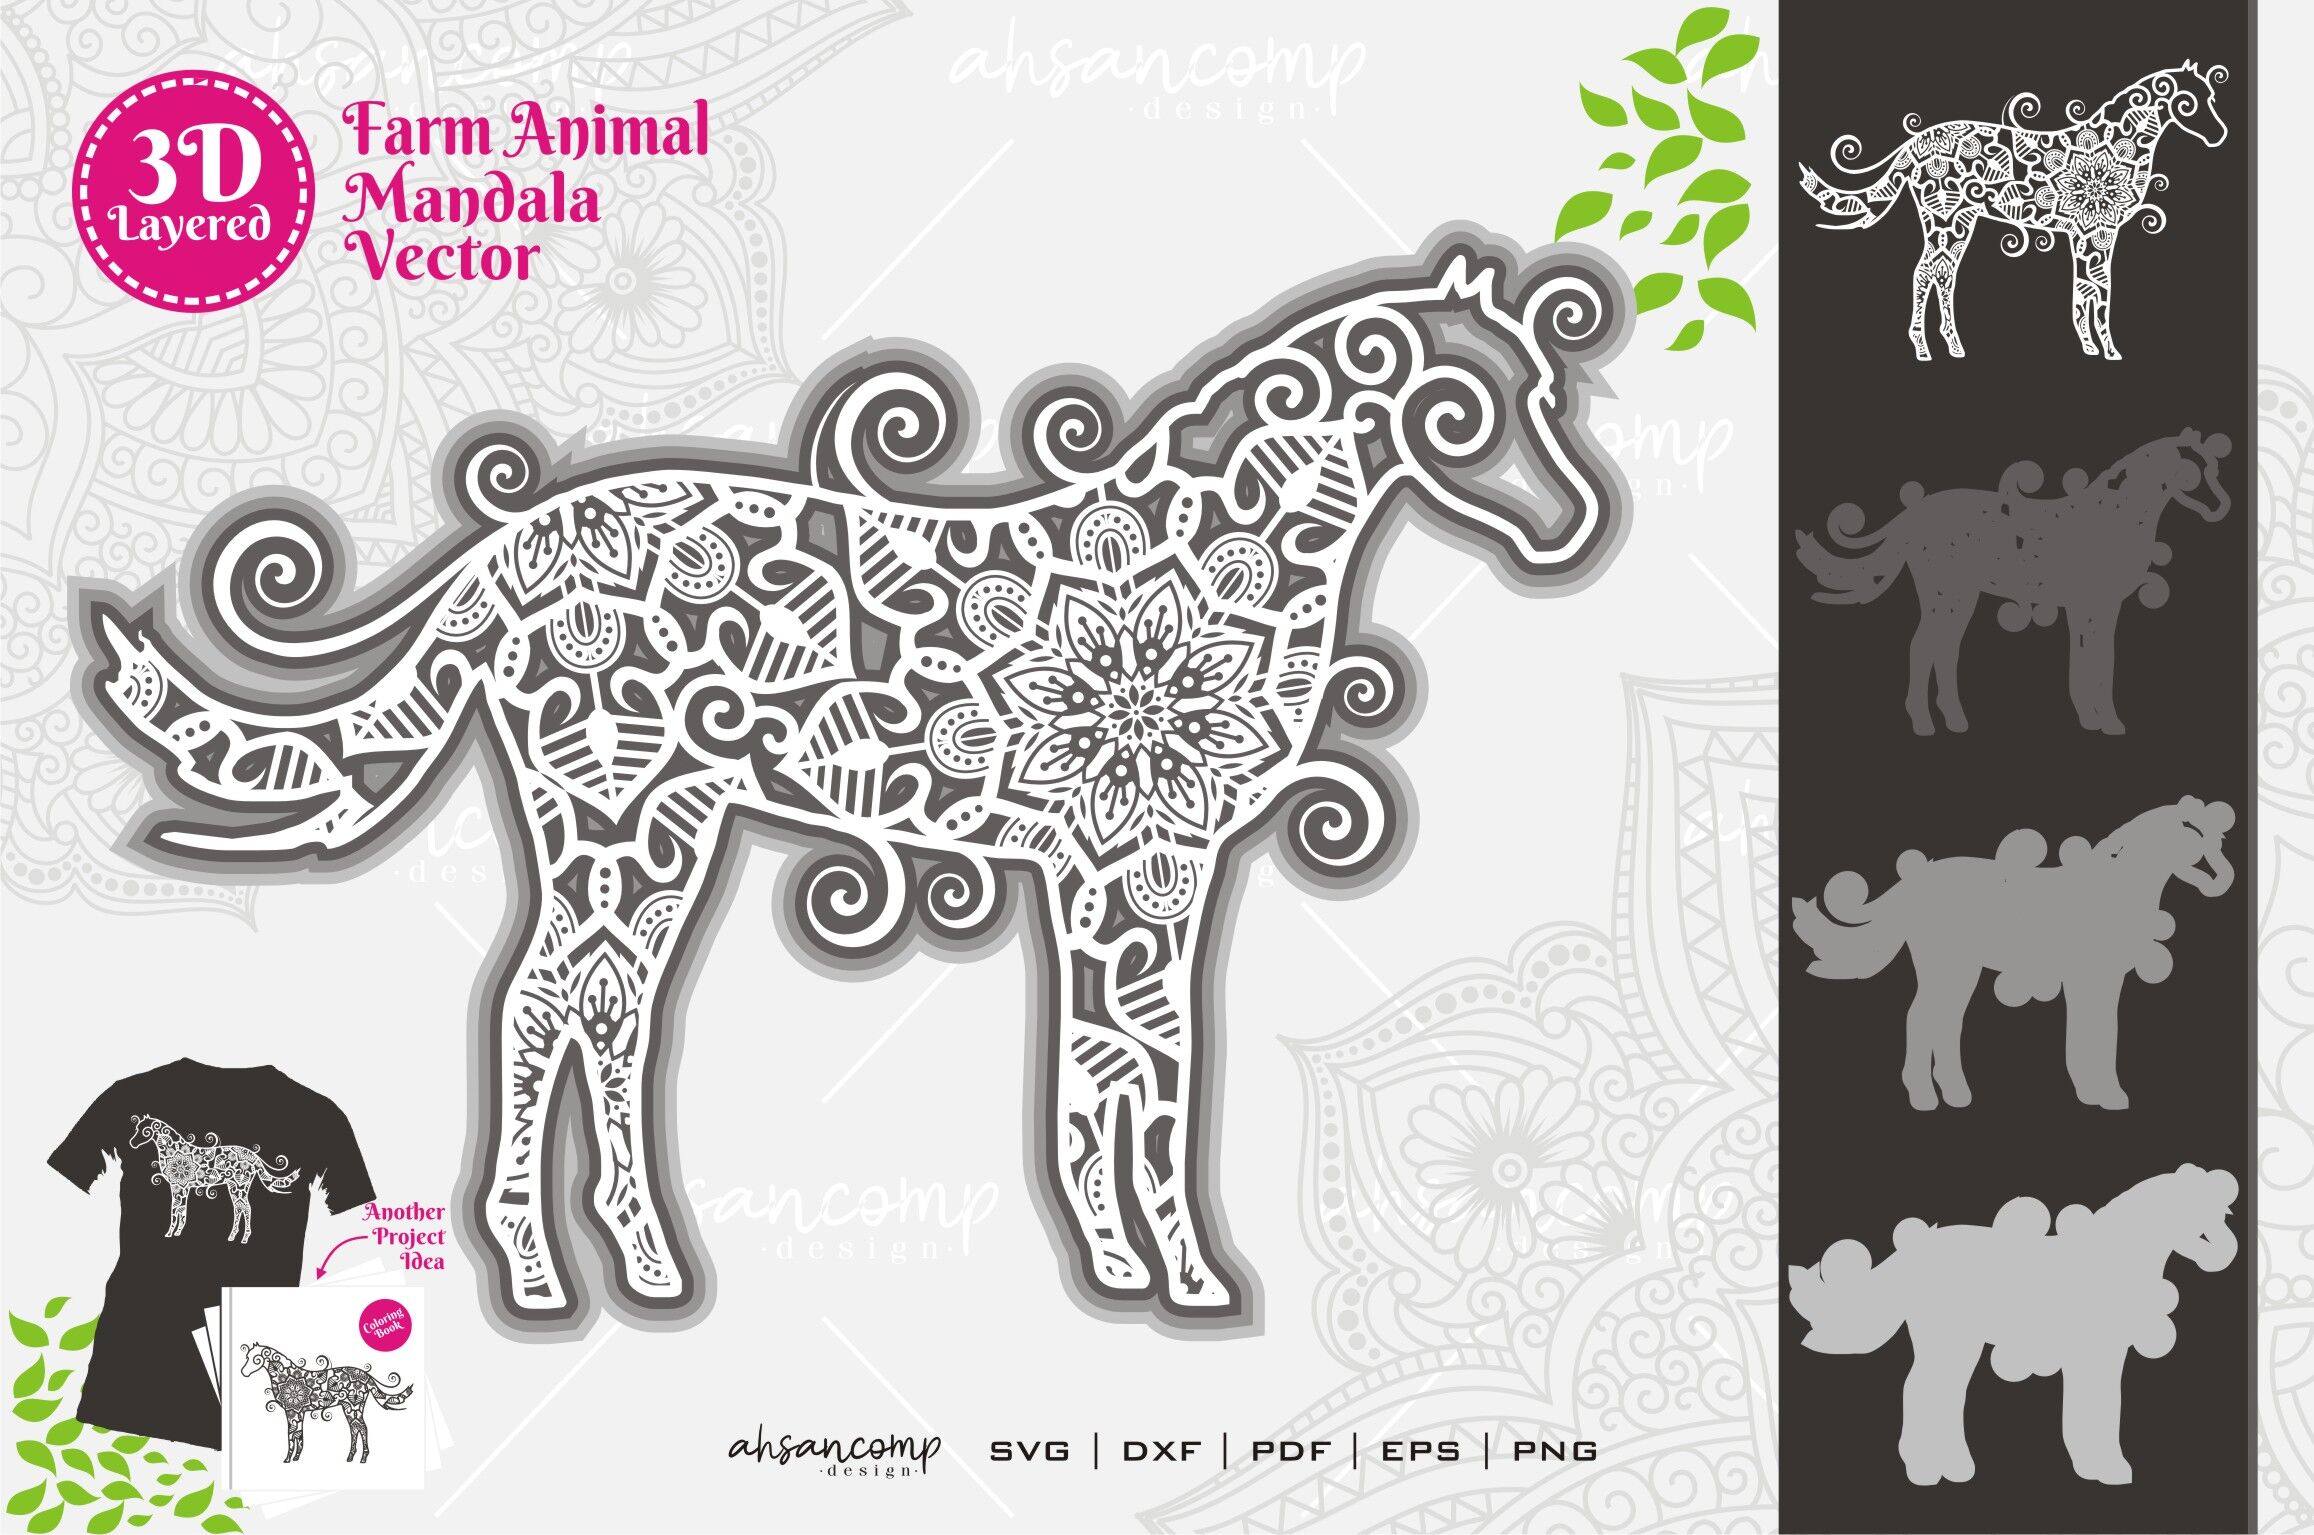 Download Farm Animal Mandala Svg 3d Layered 13 By Ahsancomp Studio Thehungryjpeg Com